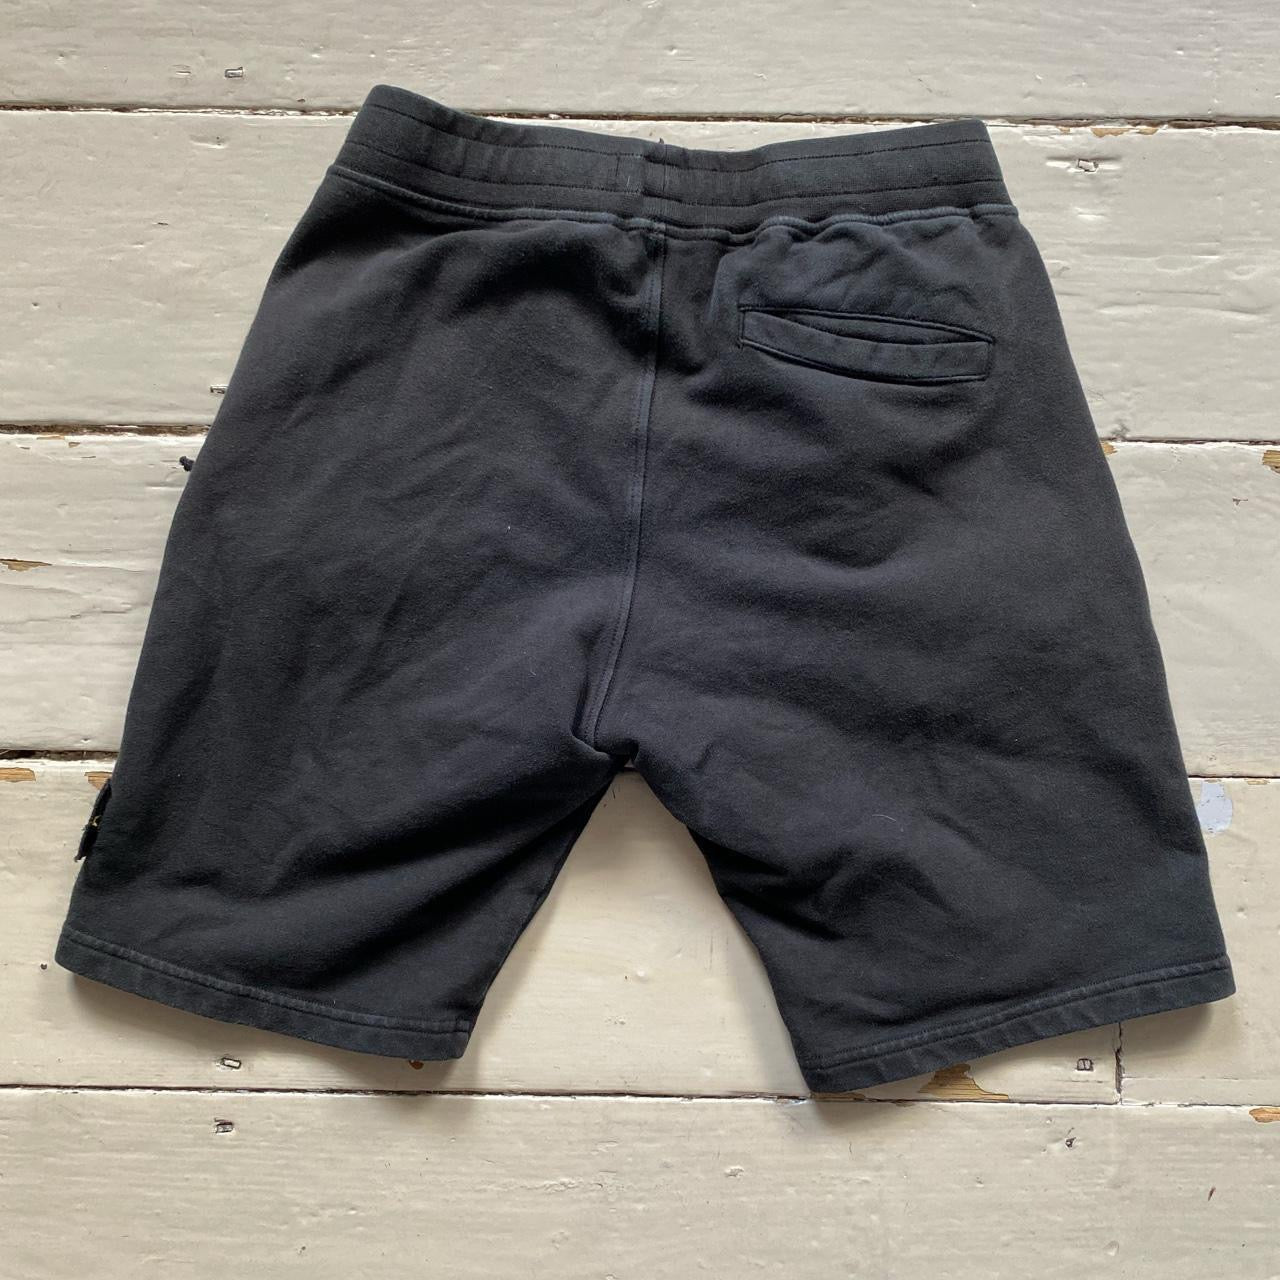 Stone Island Junior Black Shorts (Age 12)